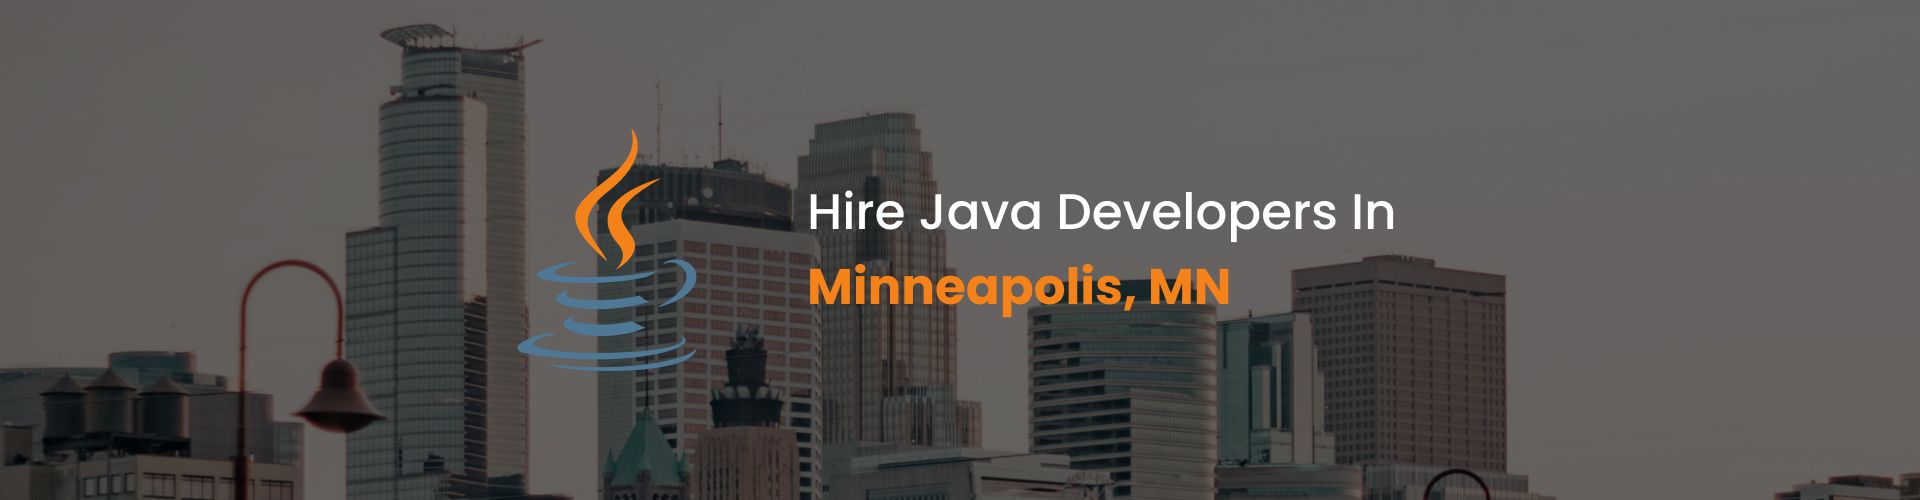 hire java developers in minneapolis